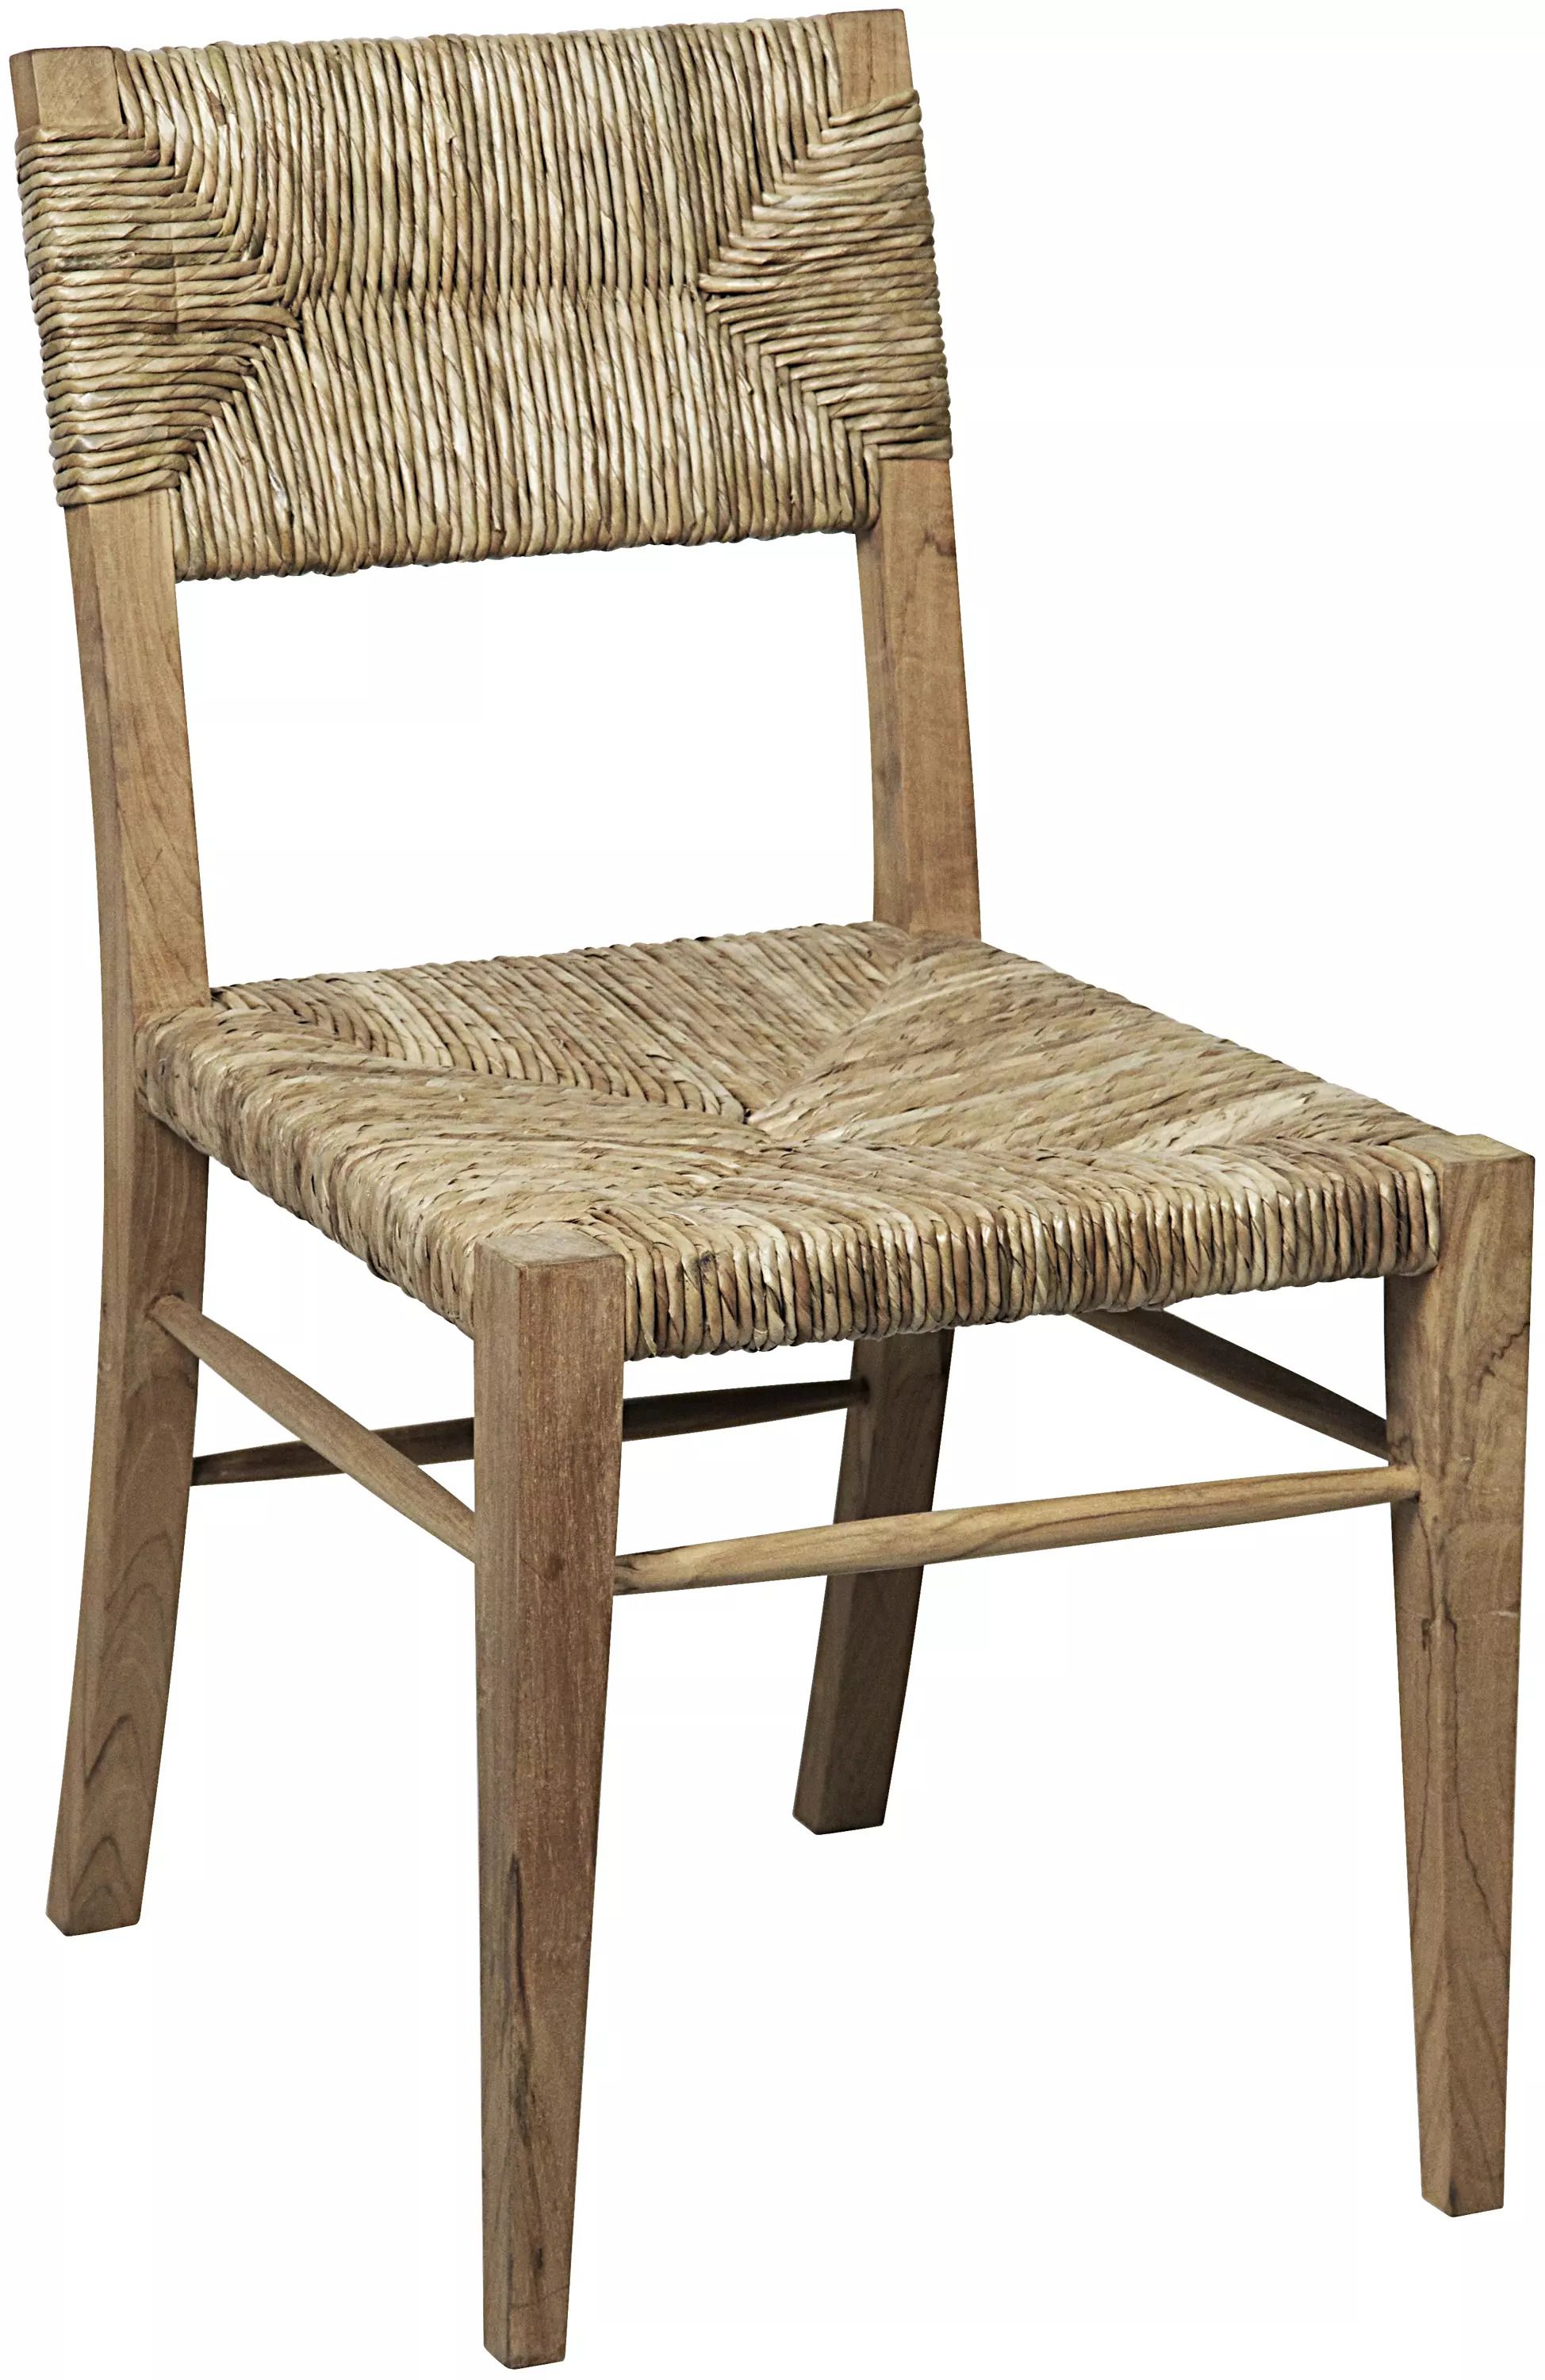 Faley Chair | Scout & Nimble